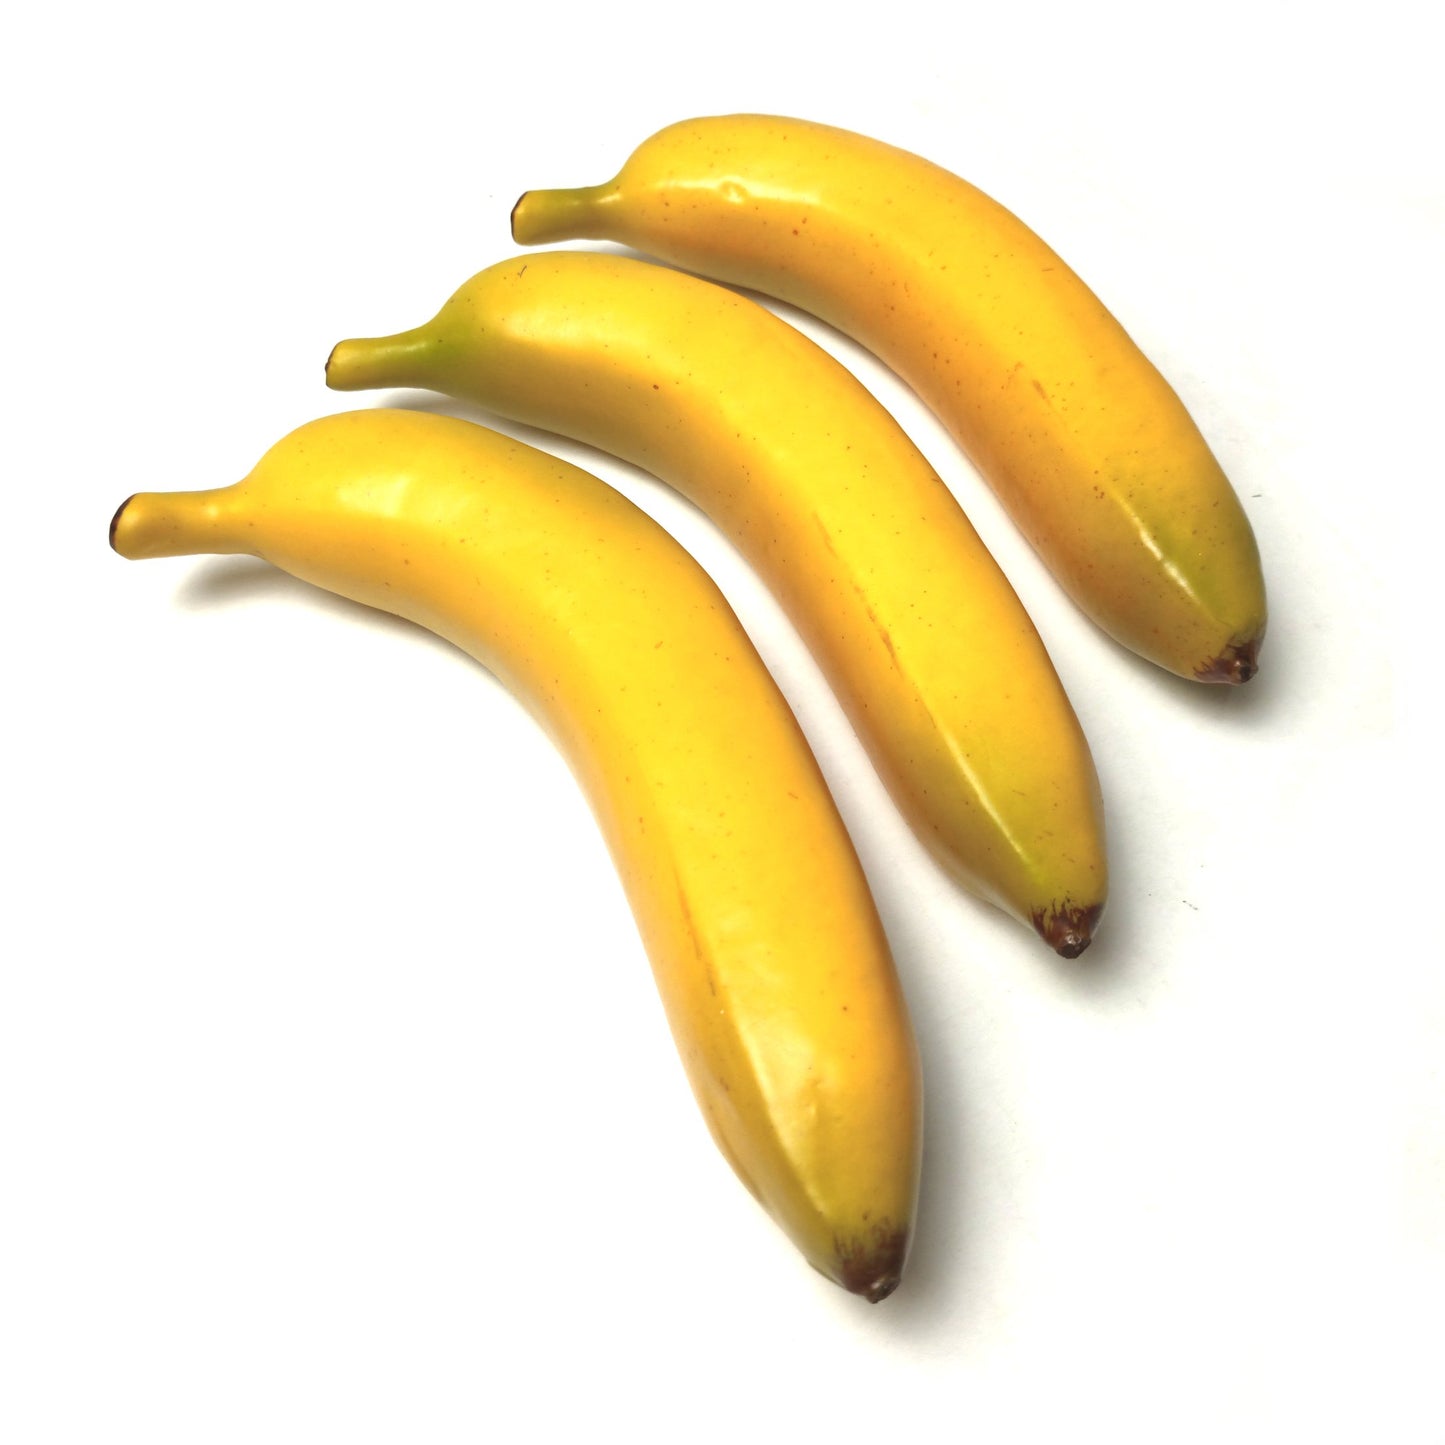 Artificial Banana Fruit